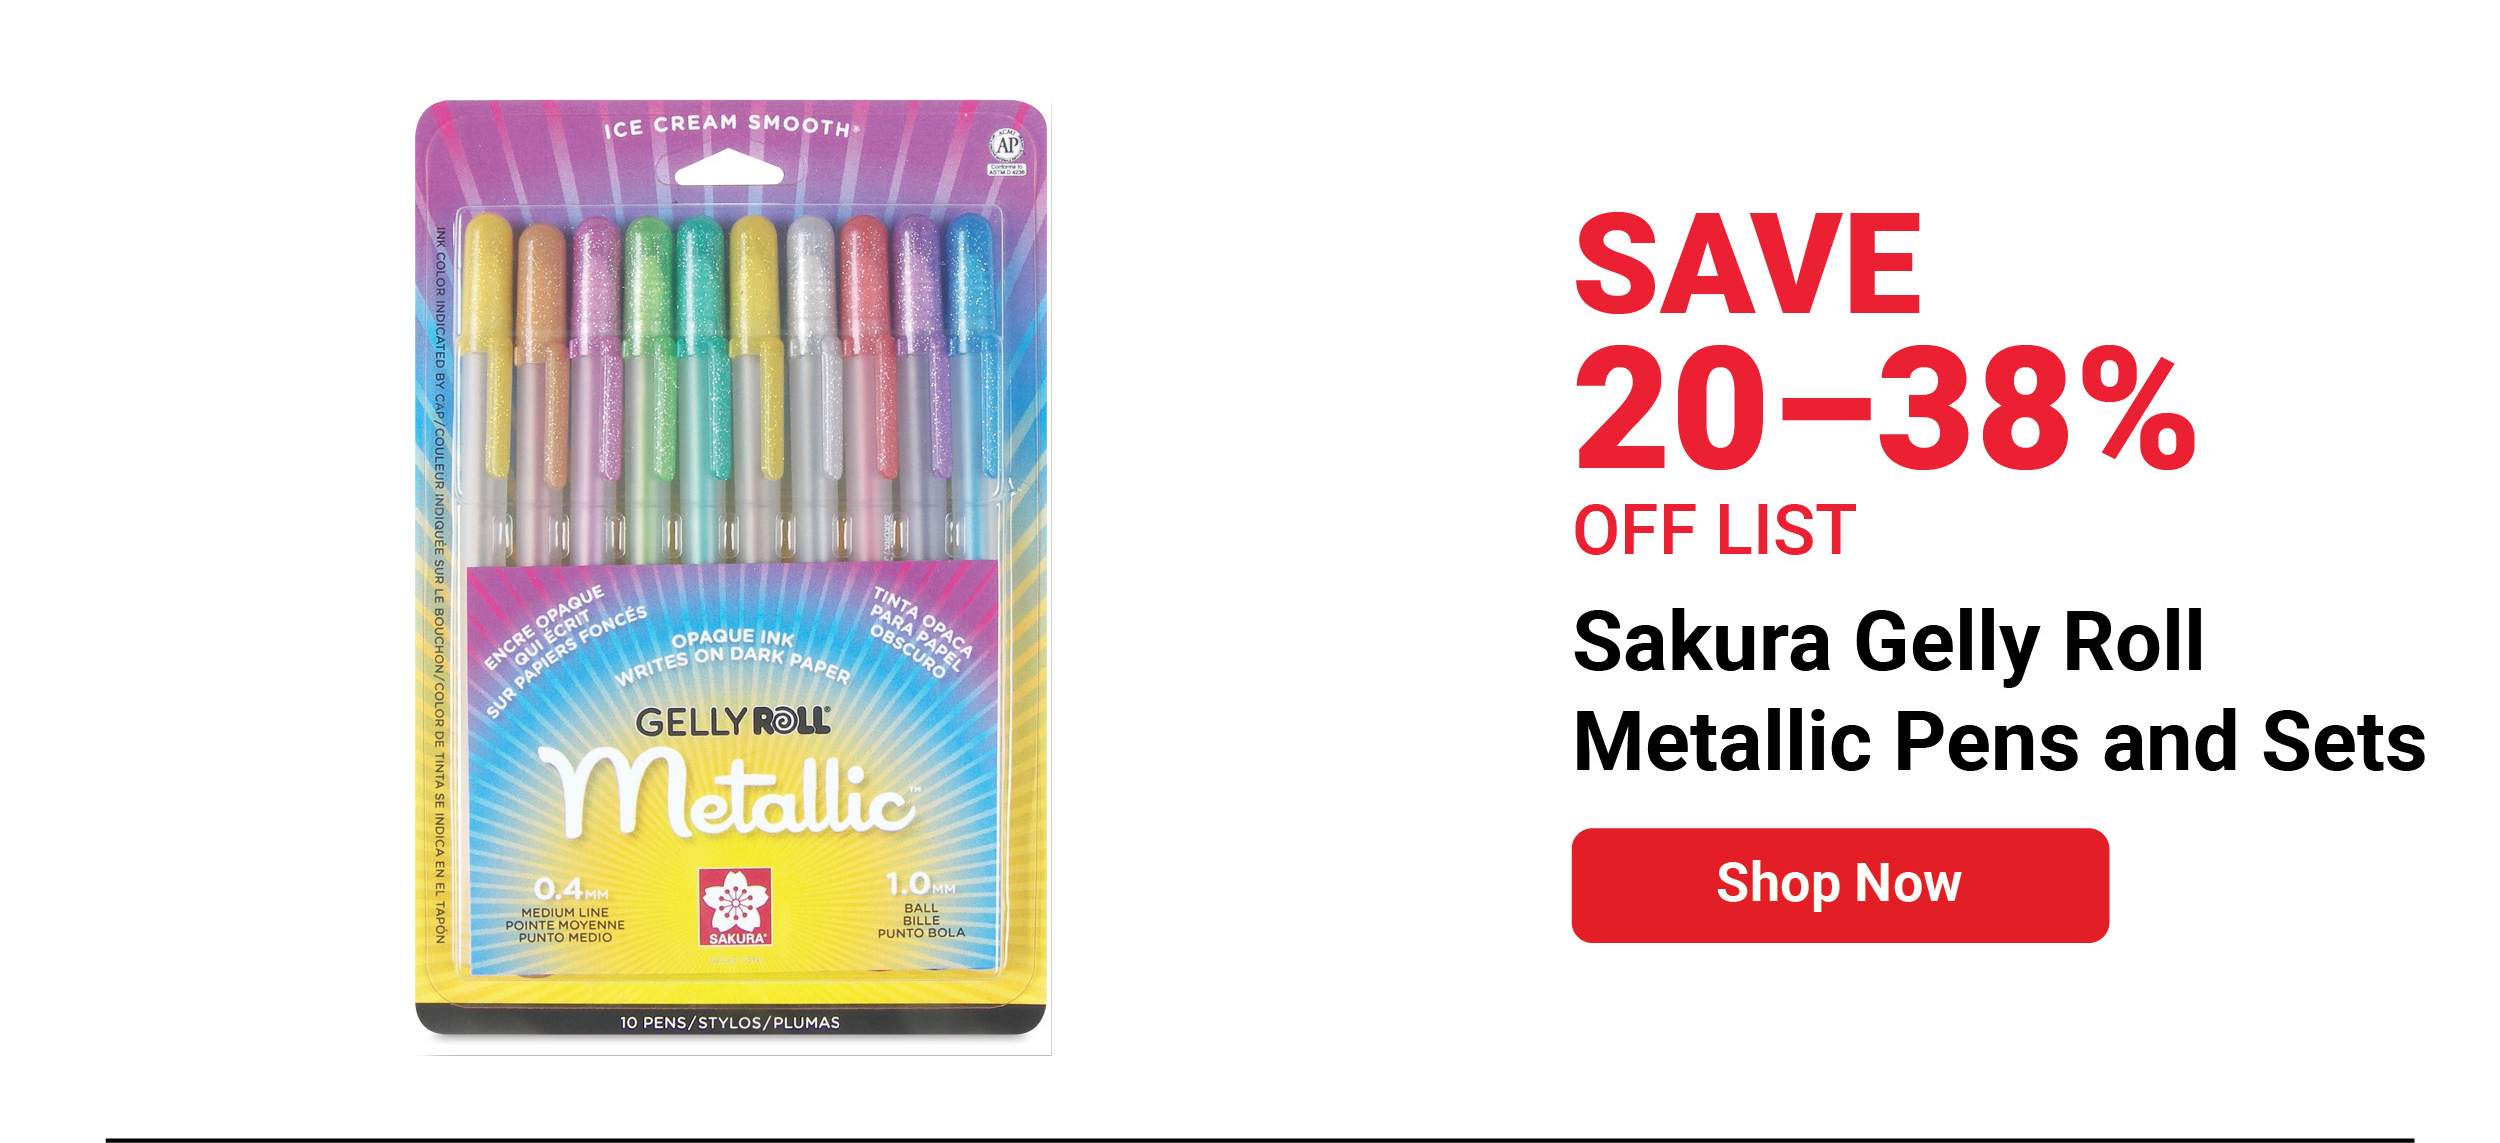 Sakura Gelly Roll Metallic Pens and Sets